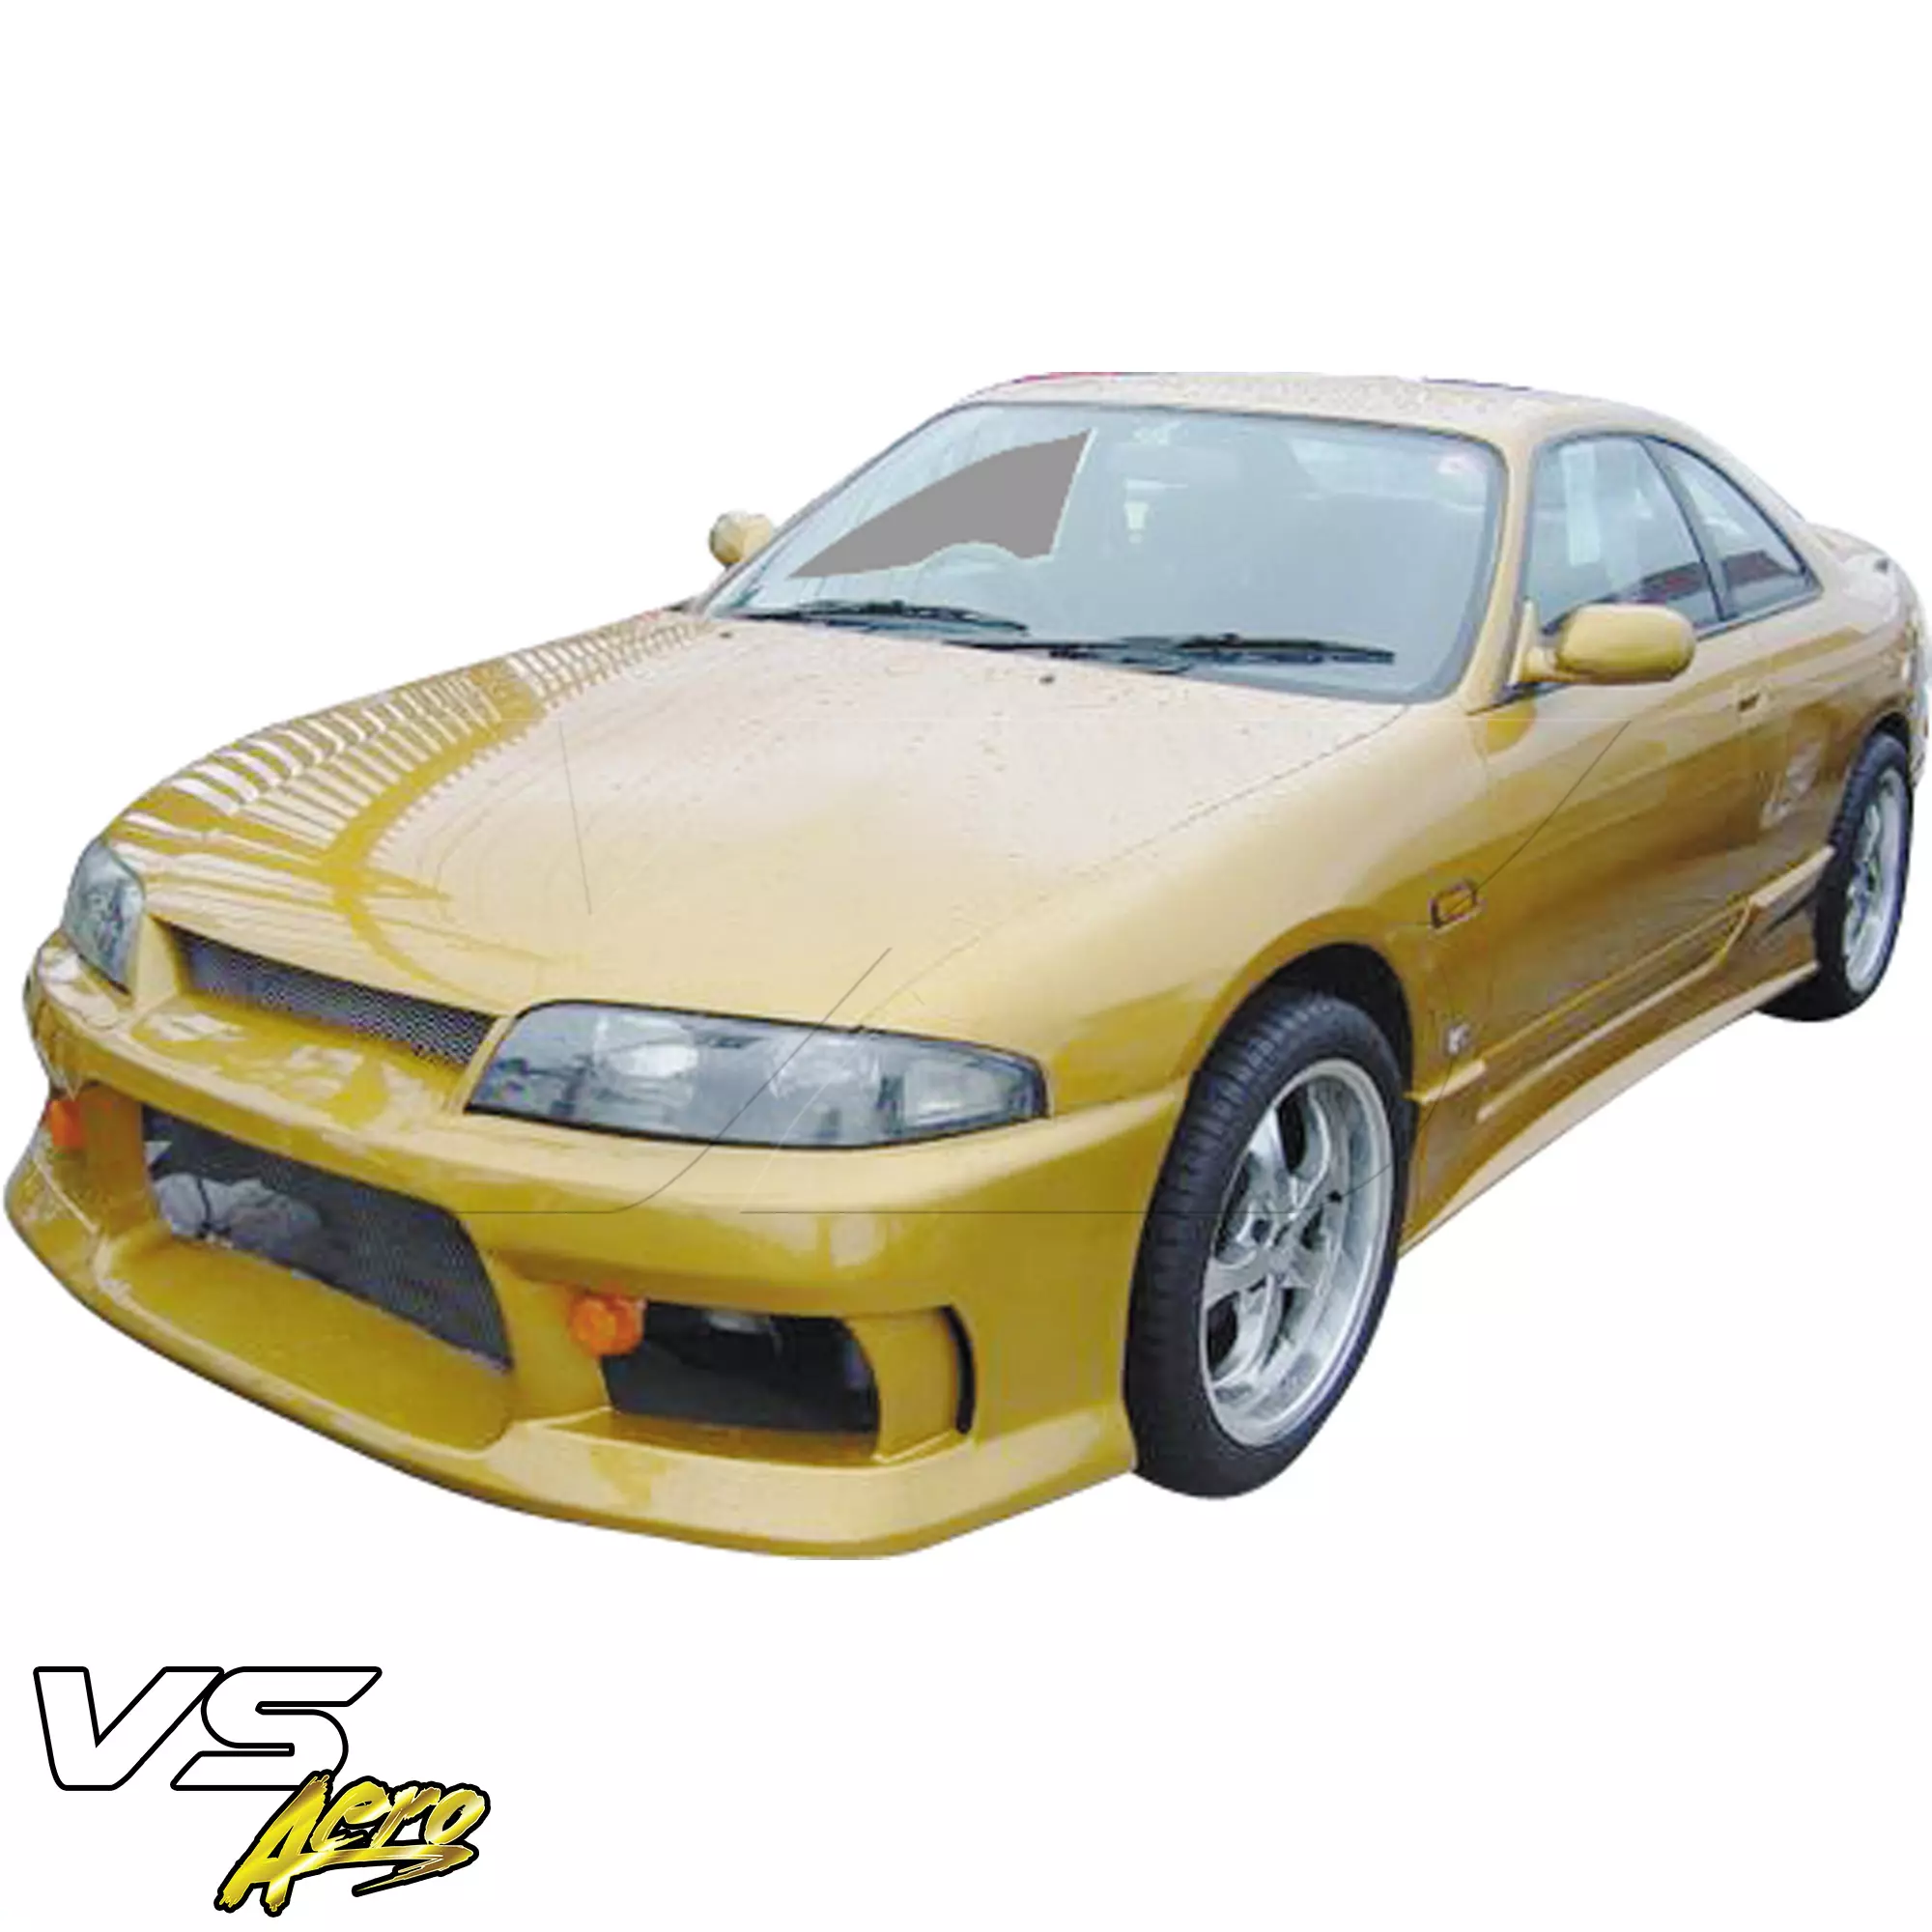 VSaero FRP MSPO v2 Body Kit 4pc > Nissan Skyline R33 GTS 1995-1998 > 2dr Coupe - Image 20